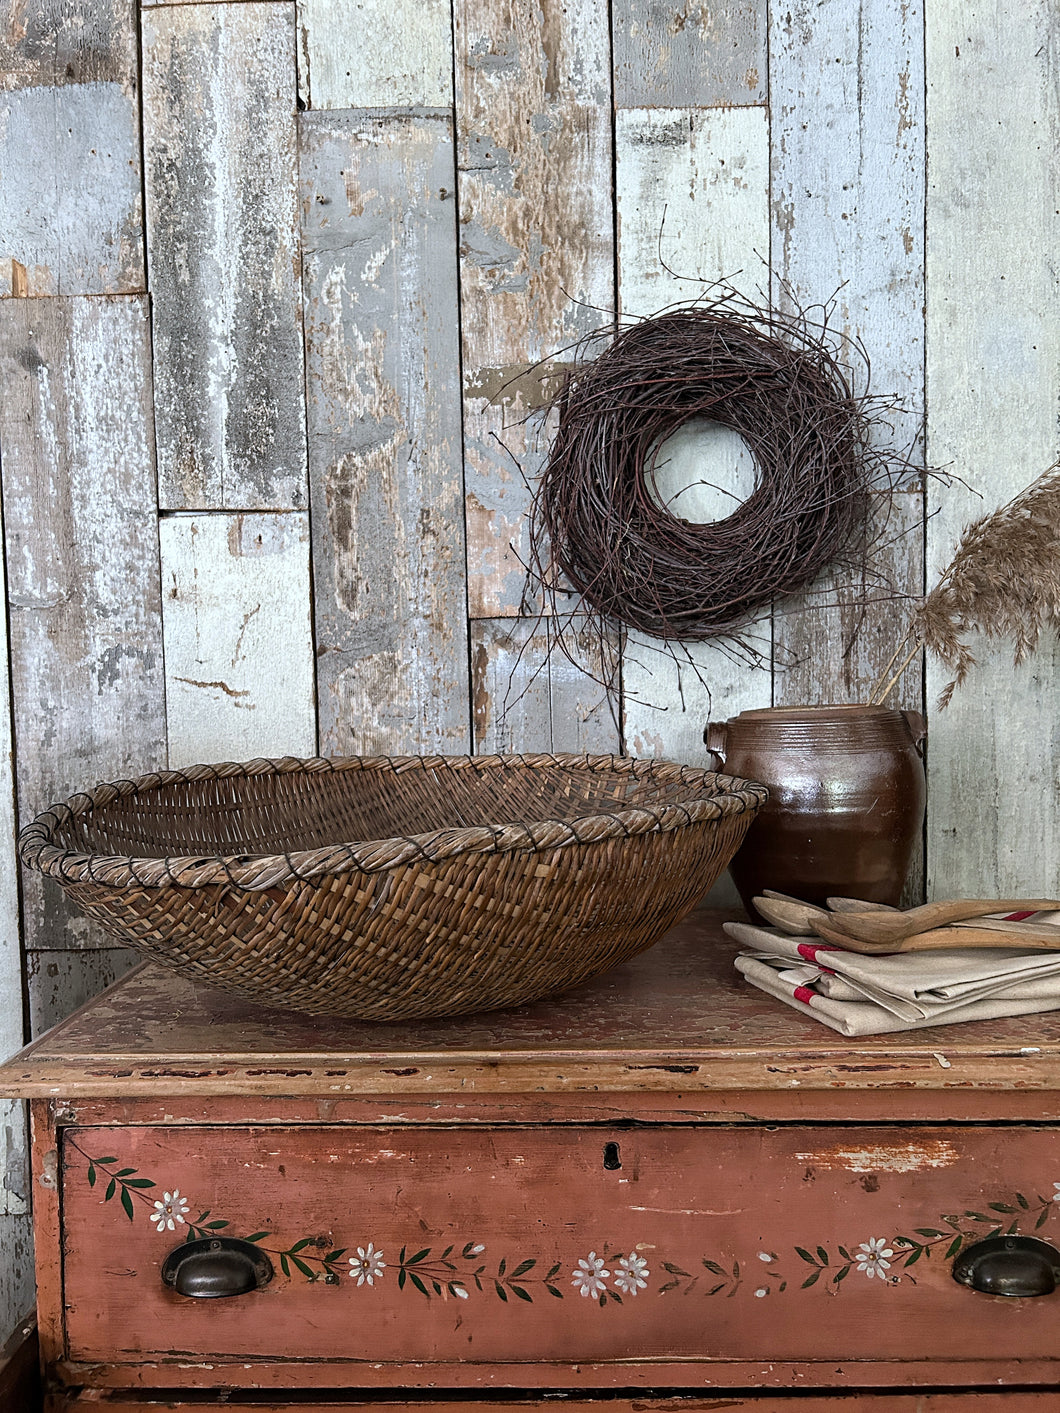 An antique rustic woven wicker Japanese tea basket